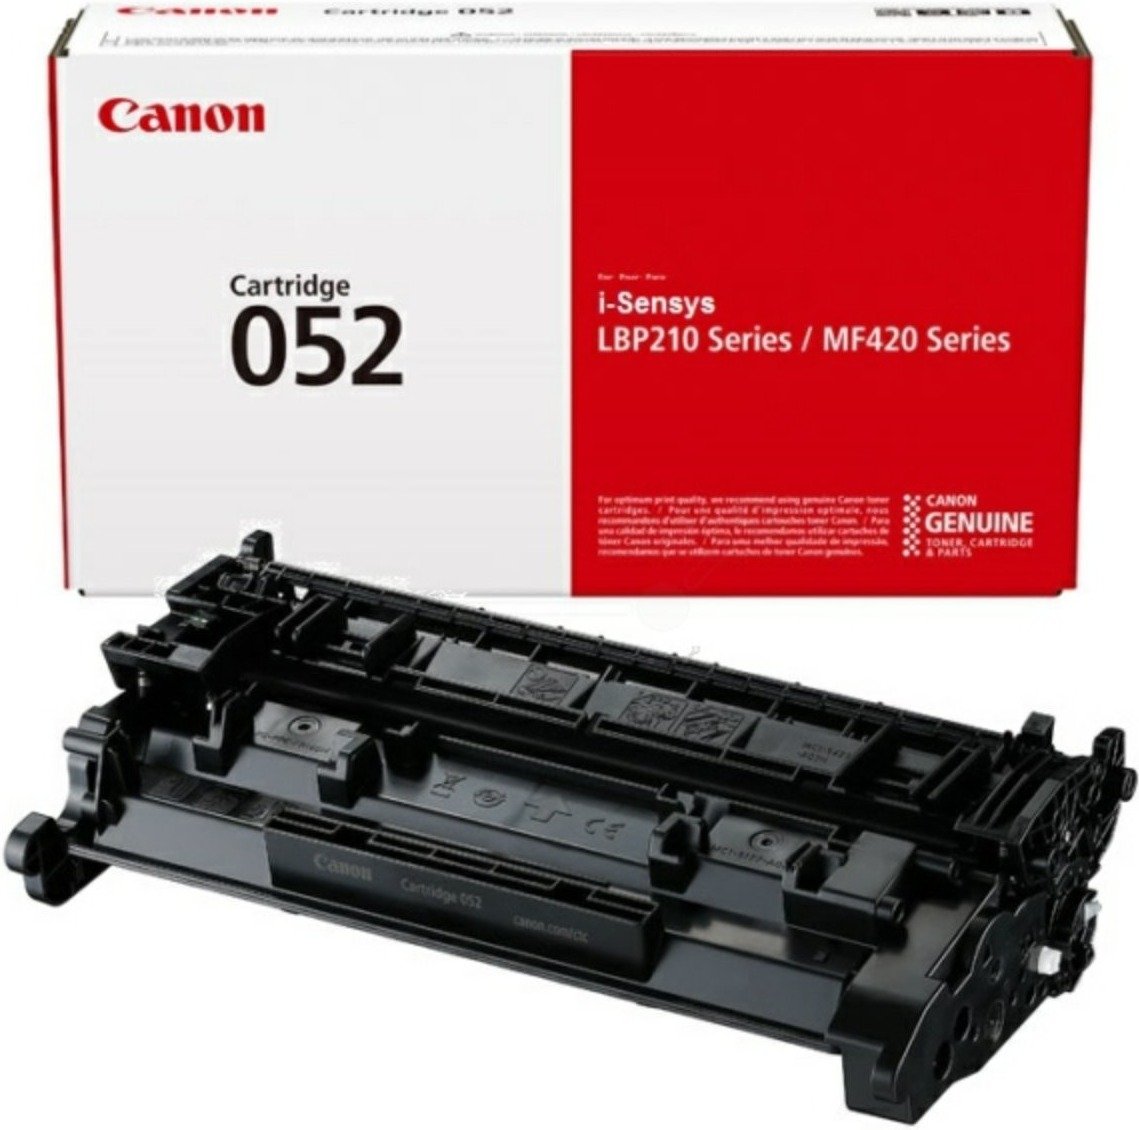 Canon cartridge 052